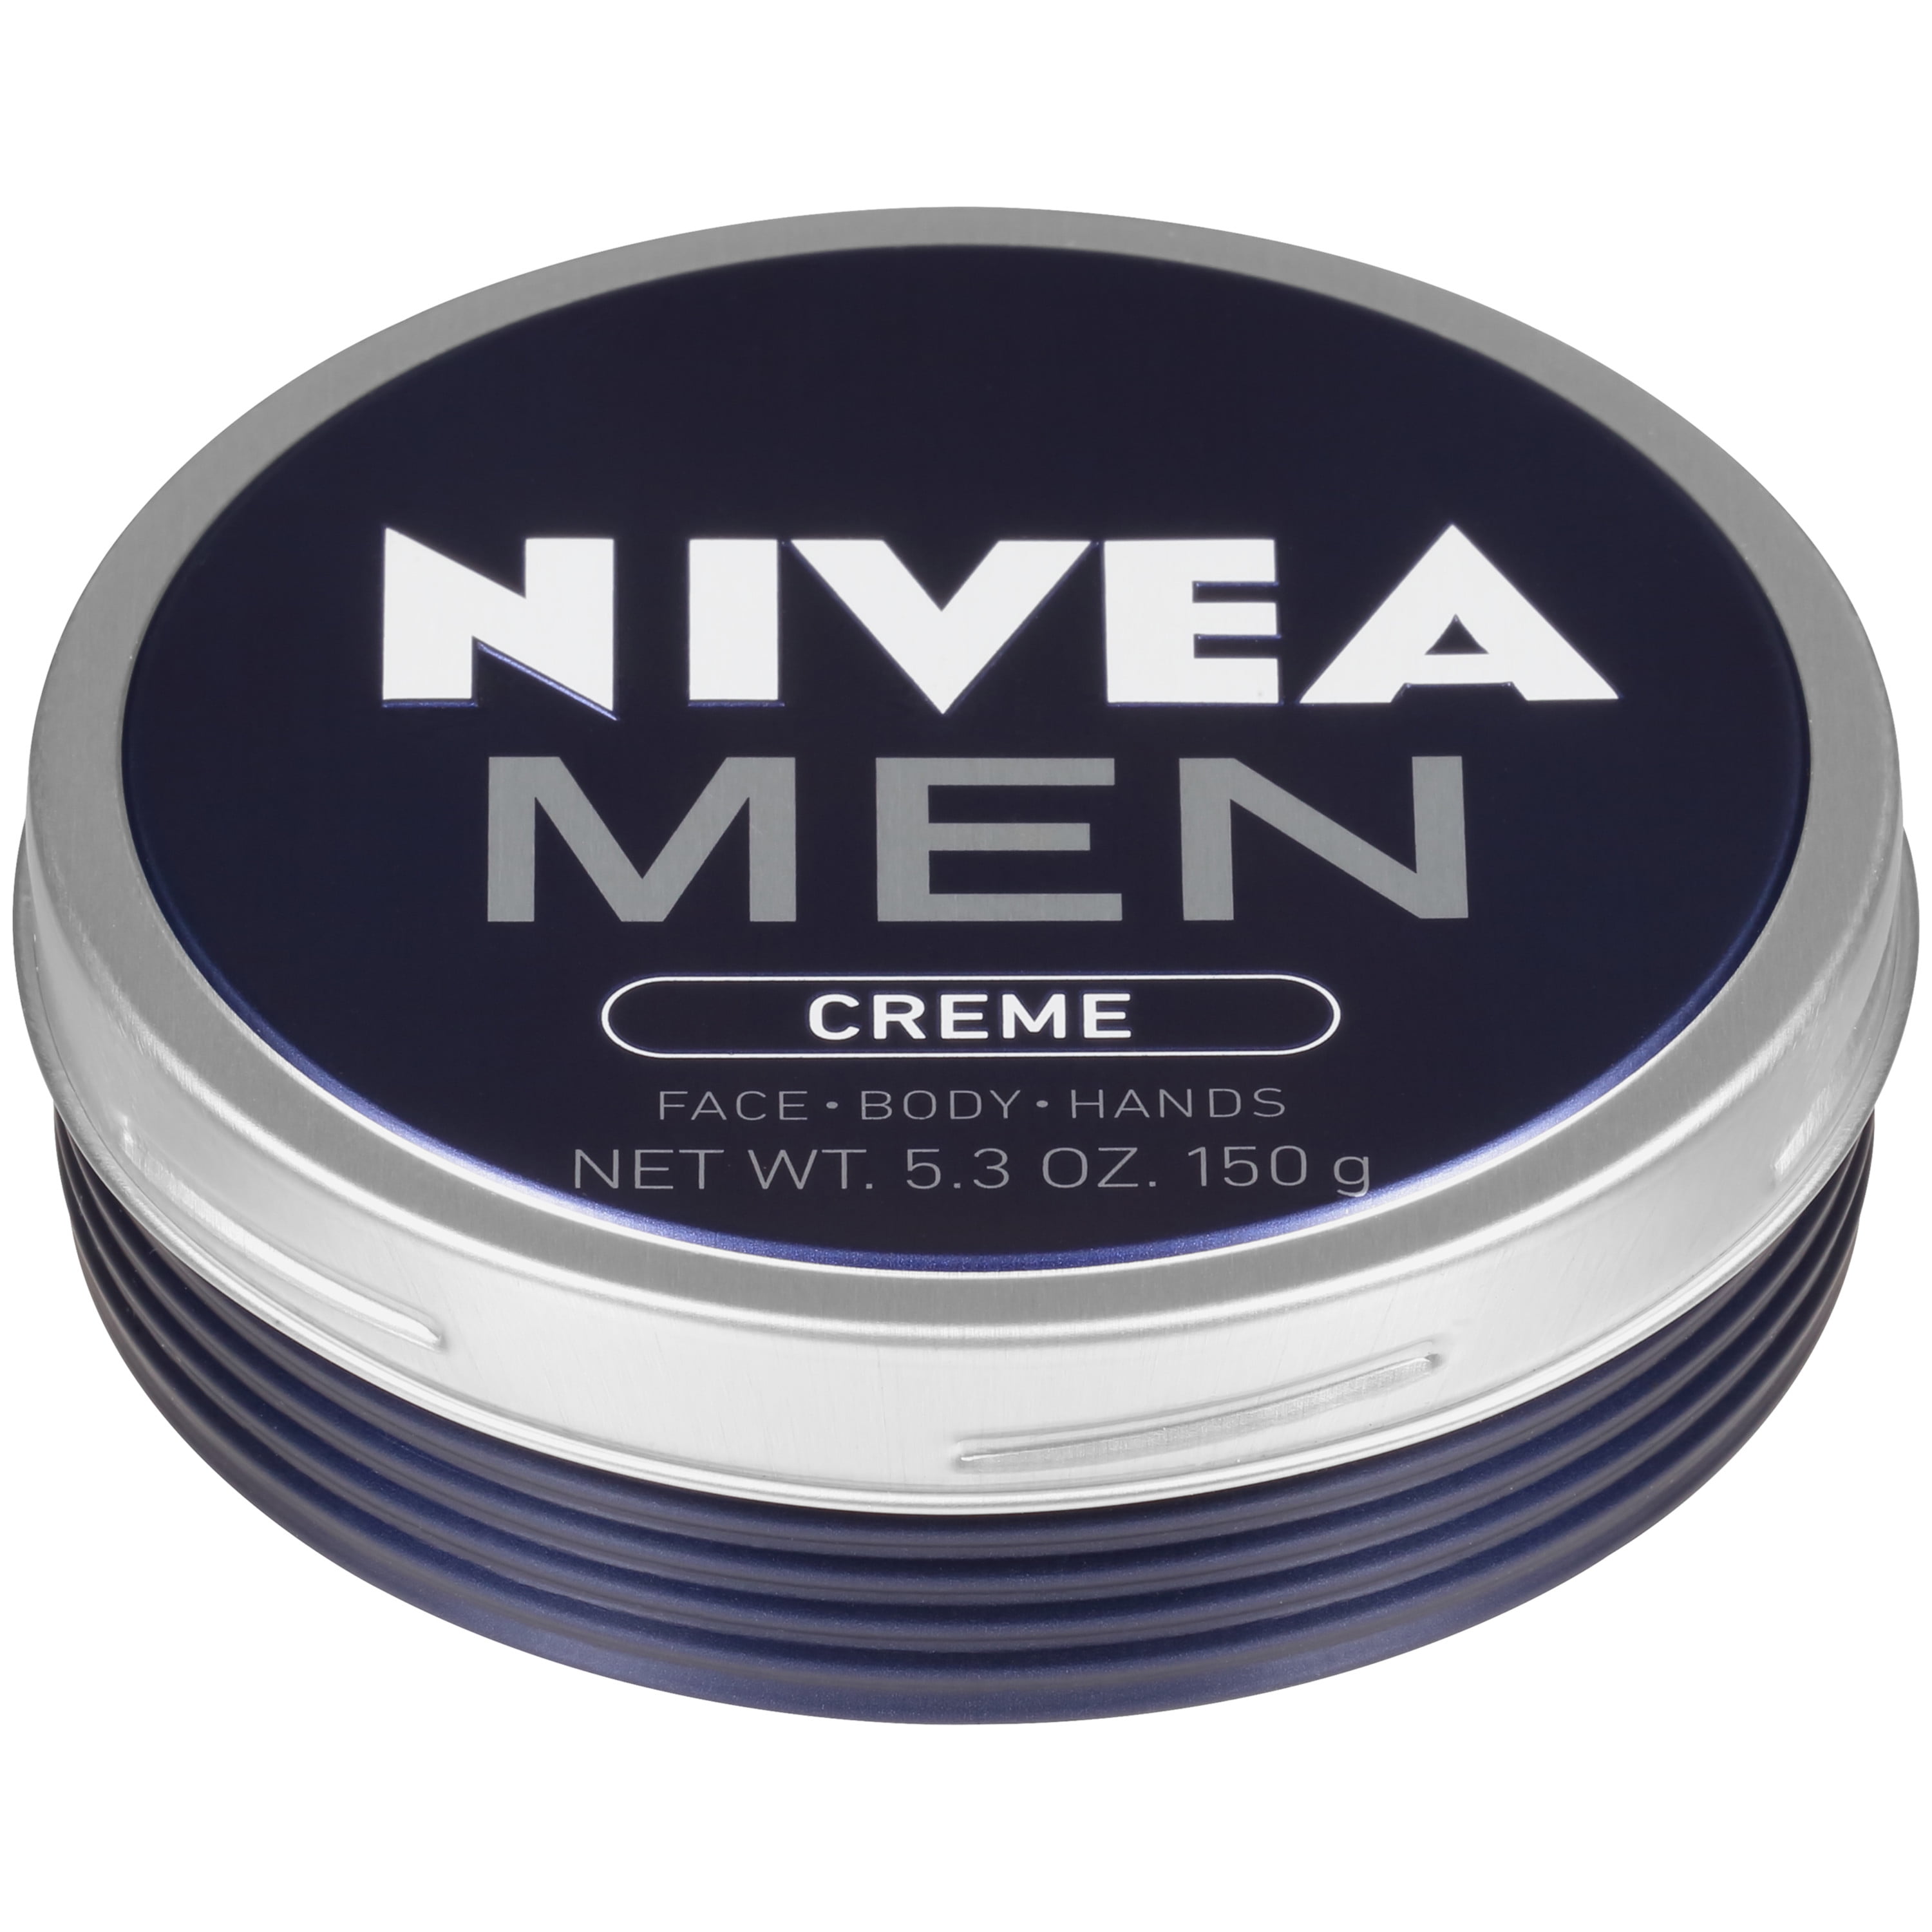 Compliment escort Graan NIVEA MEN Creme, Face Hand and Body Cream, 5.3 oz. - Walmart.com